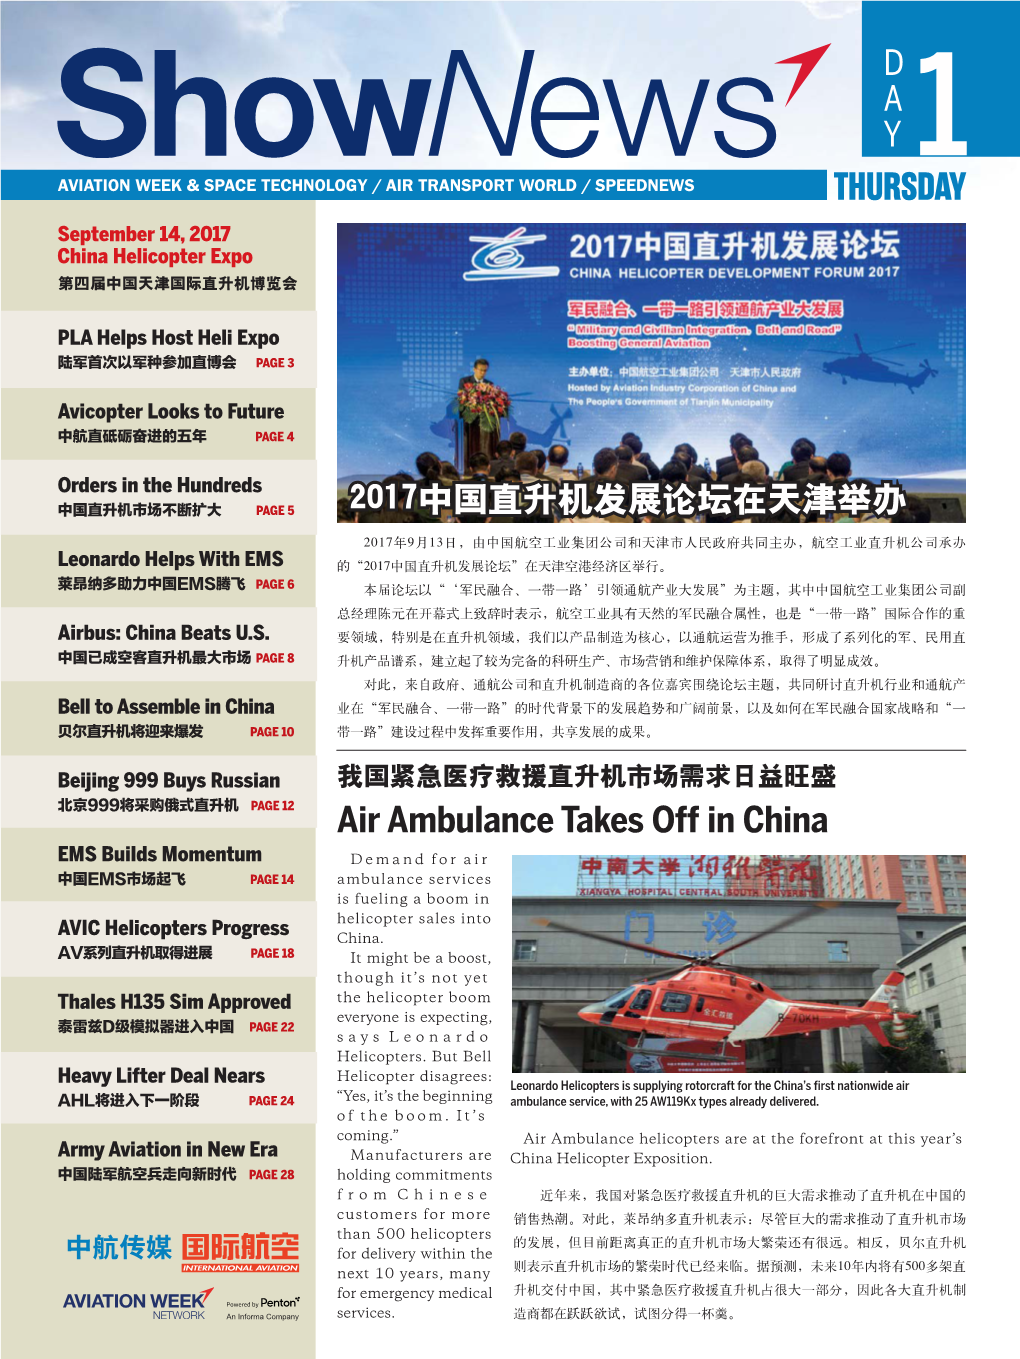 Shownews Managing Director Beijing Huabin Star General Aviation Co